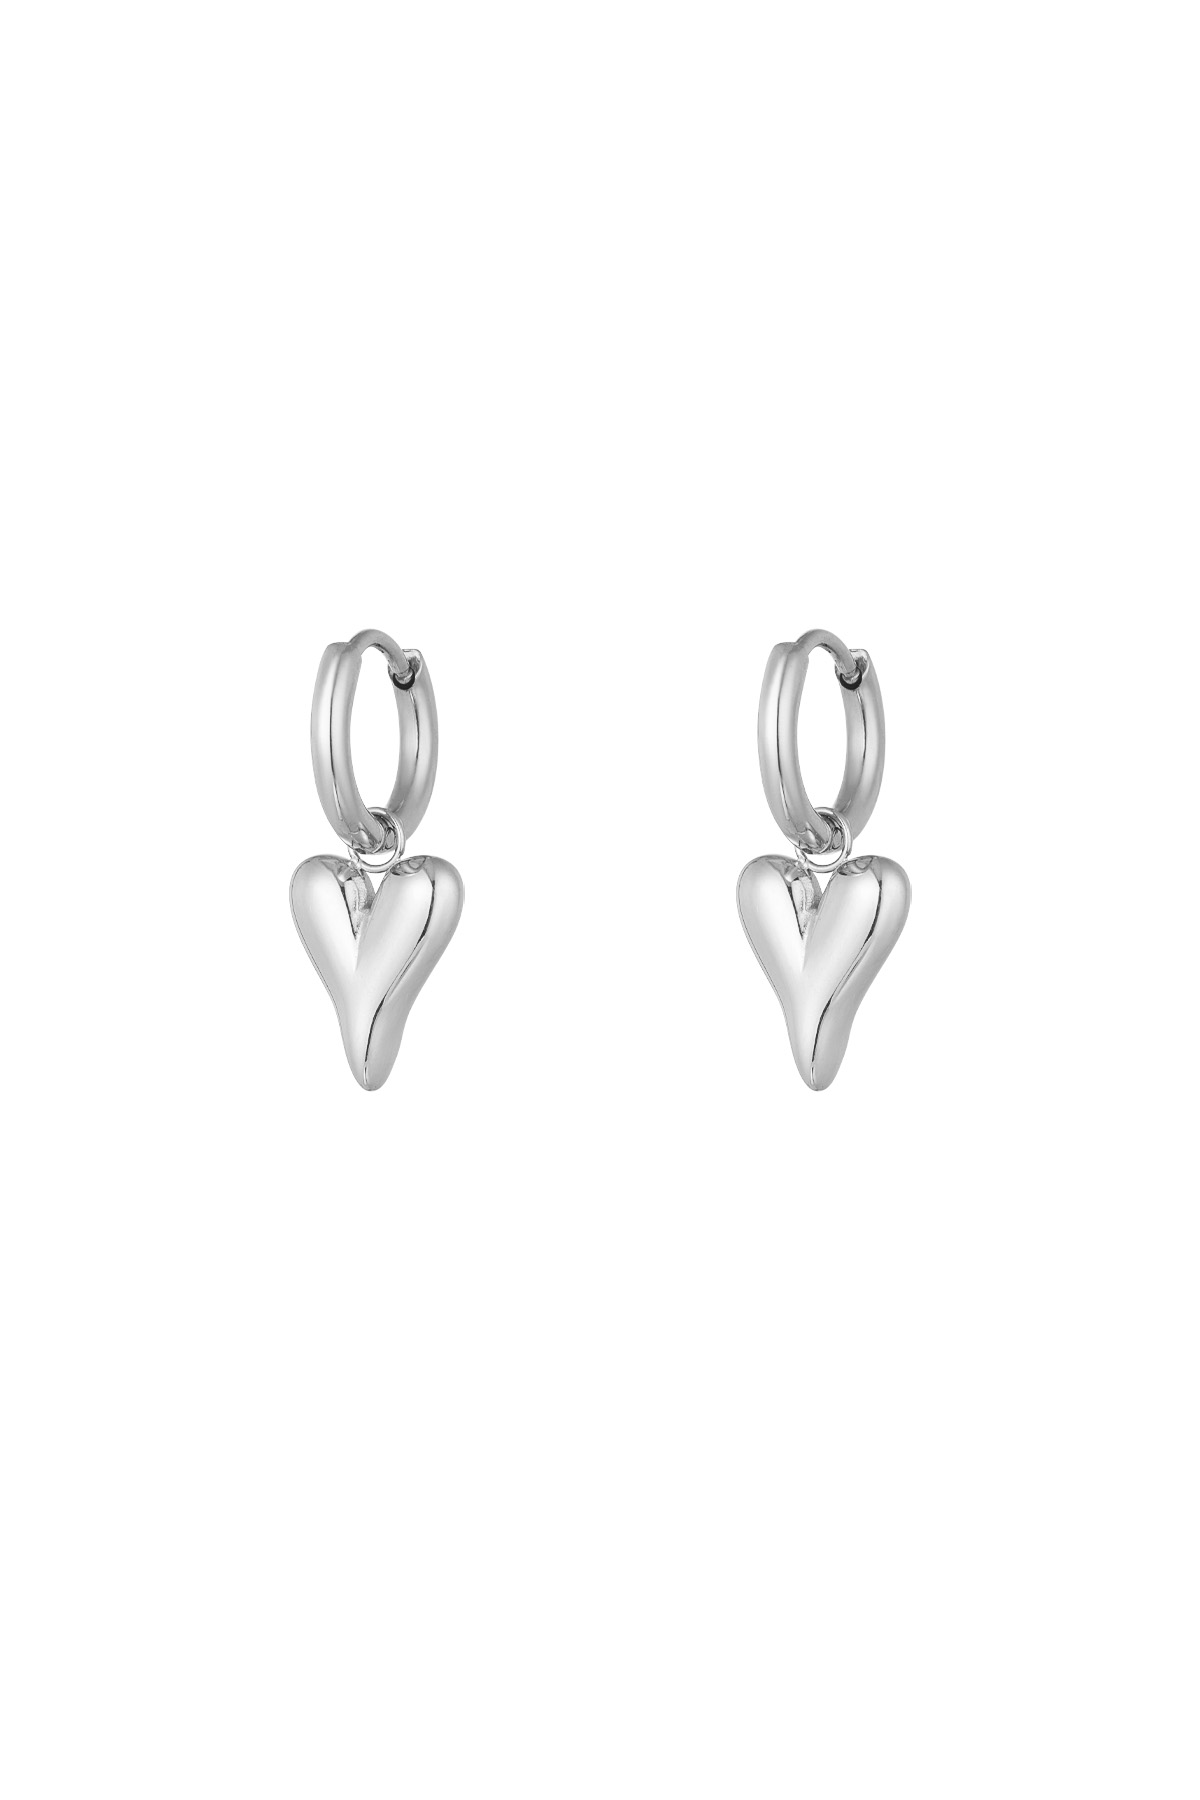 Herzförmige Ohrringe aus Edelstahl – Silber